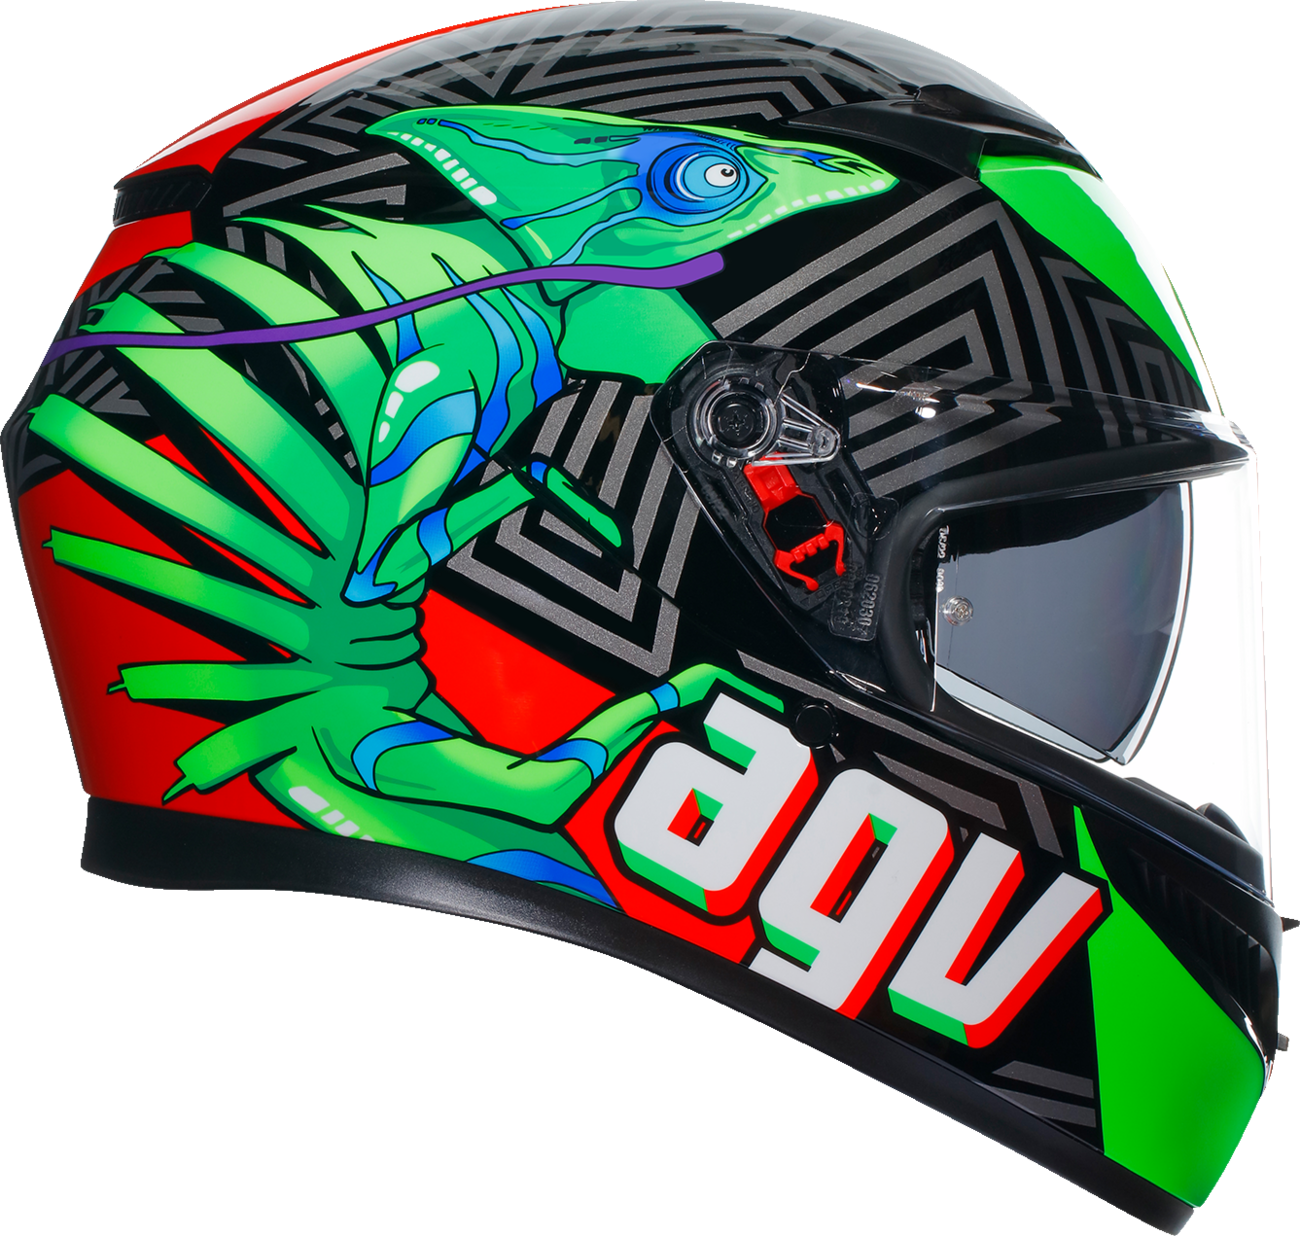 AGV K3 Helmet - Kamaleon - Black/Red/Green - Medium 2118381004013M